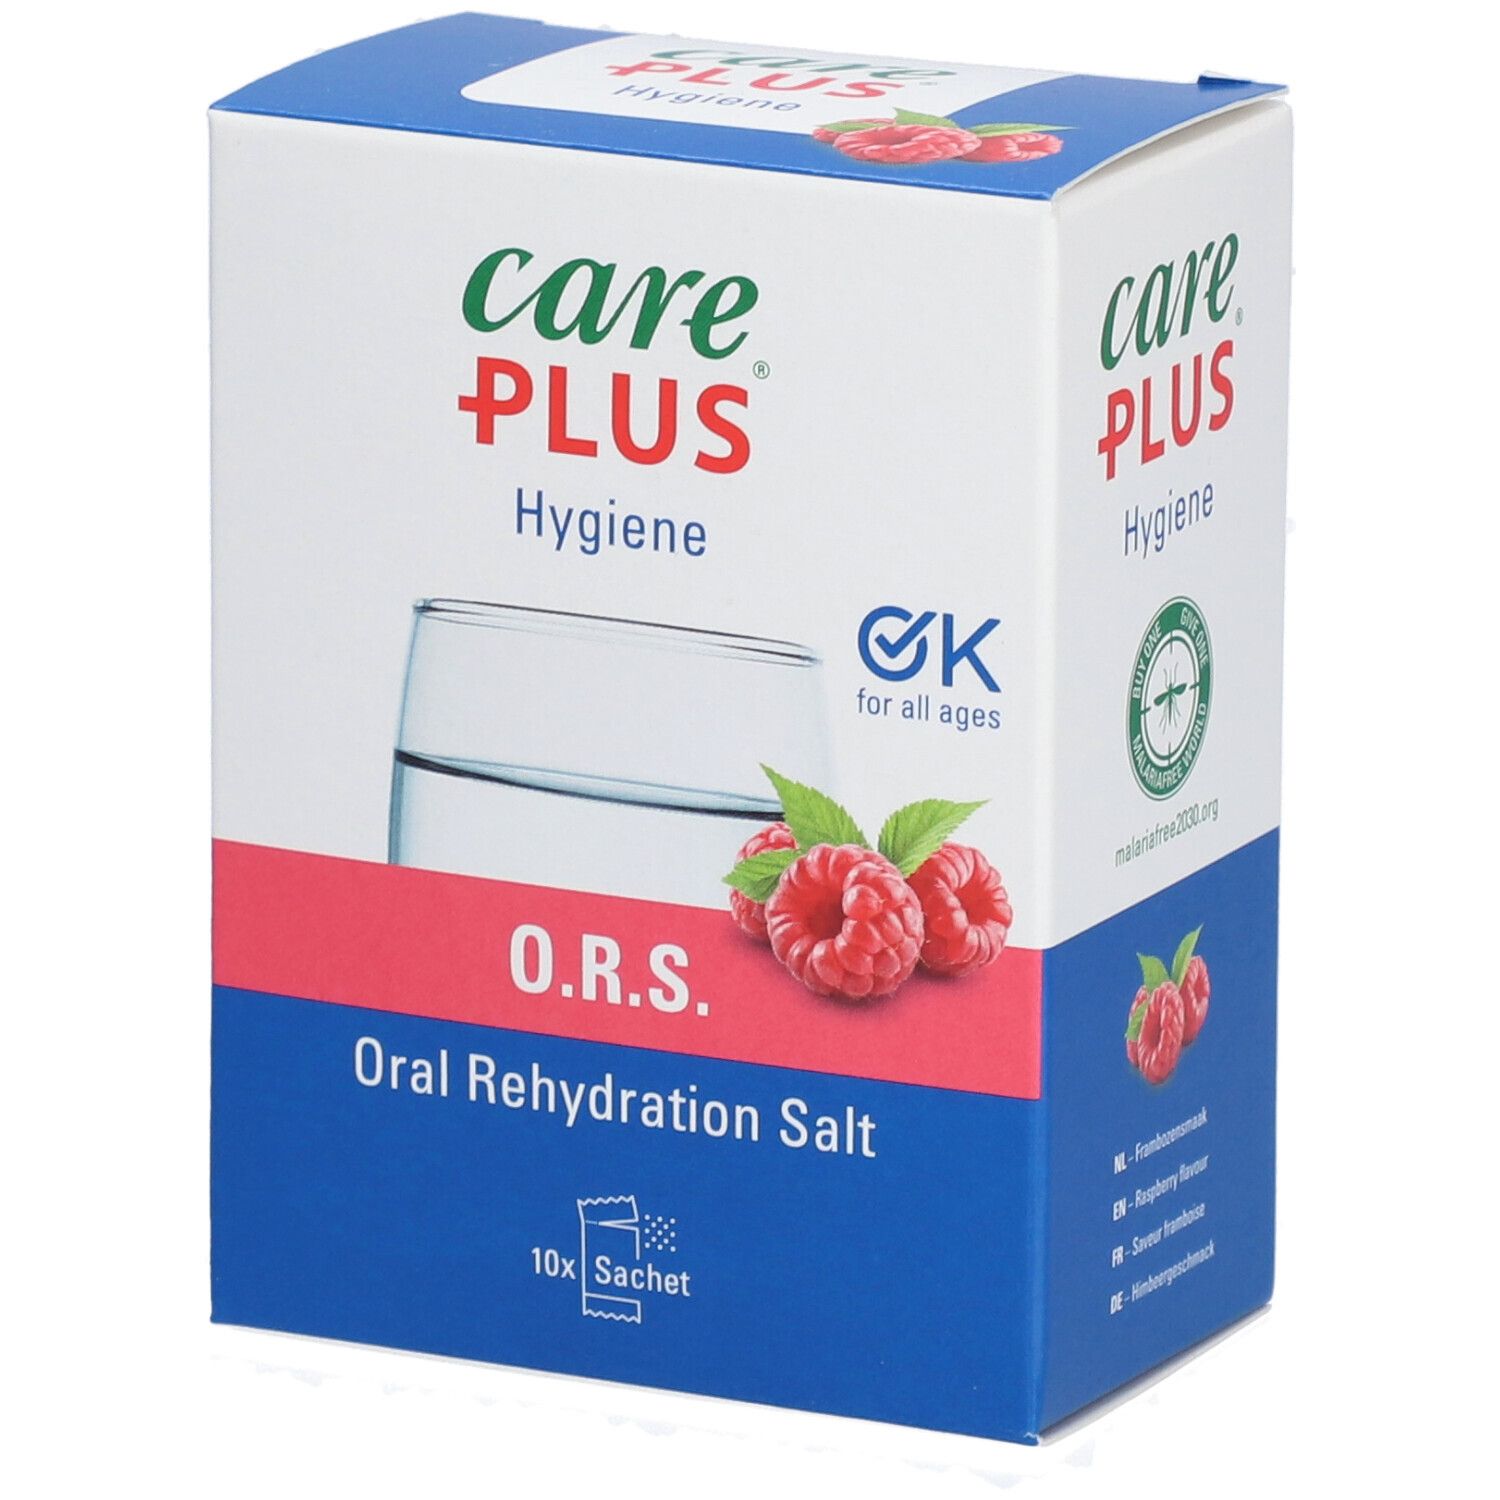 Care Plus Hygiene O.r.s.